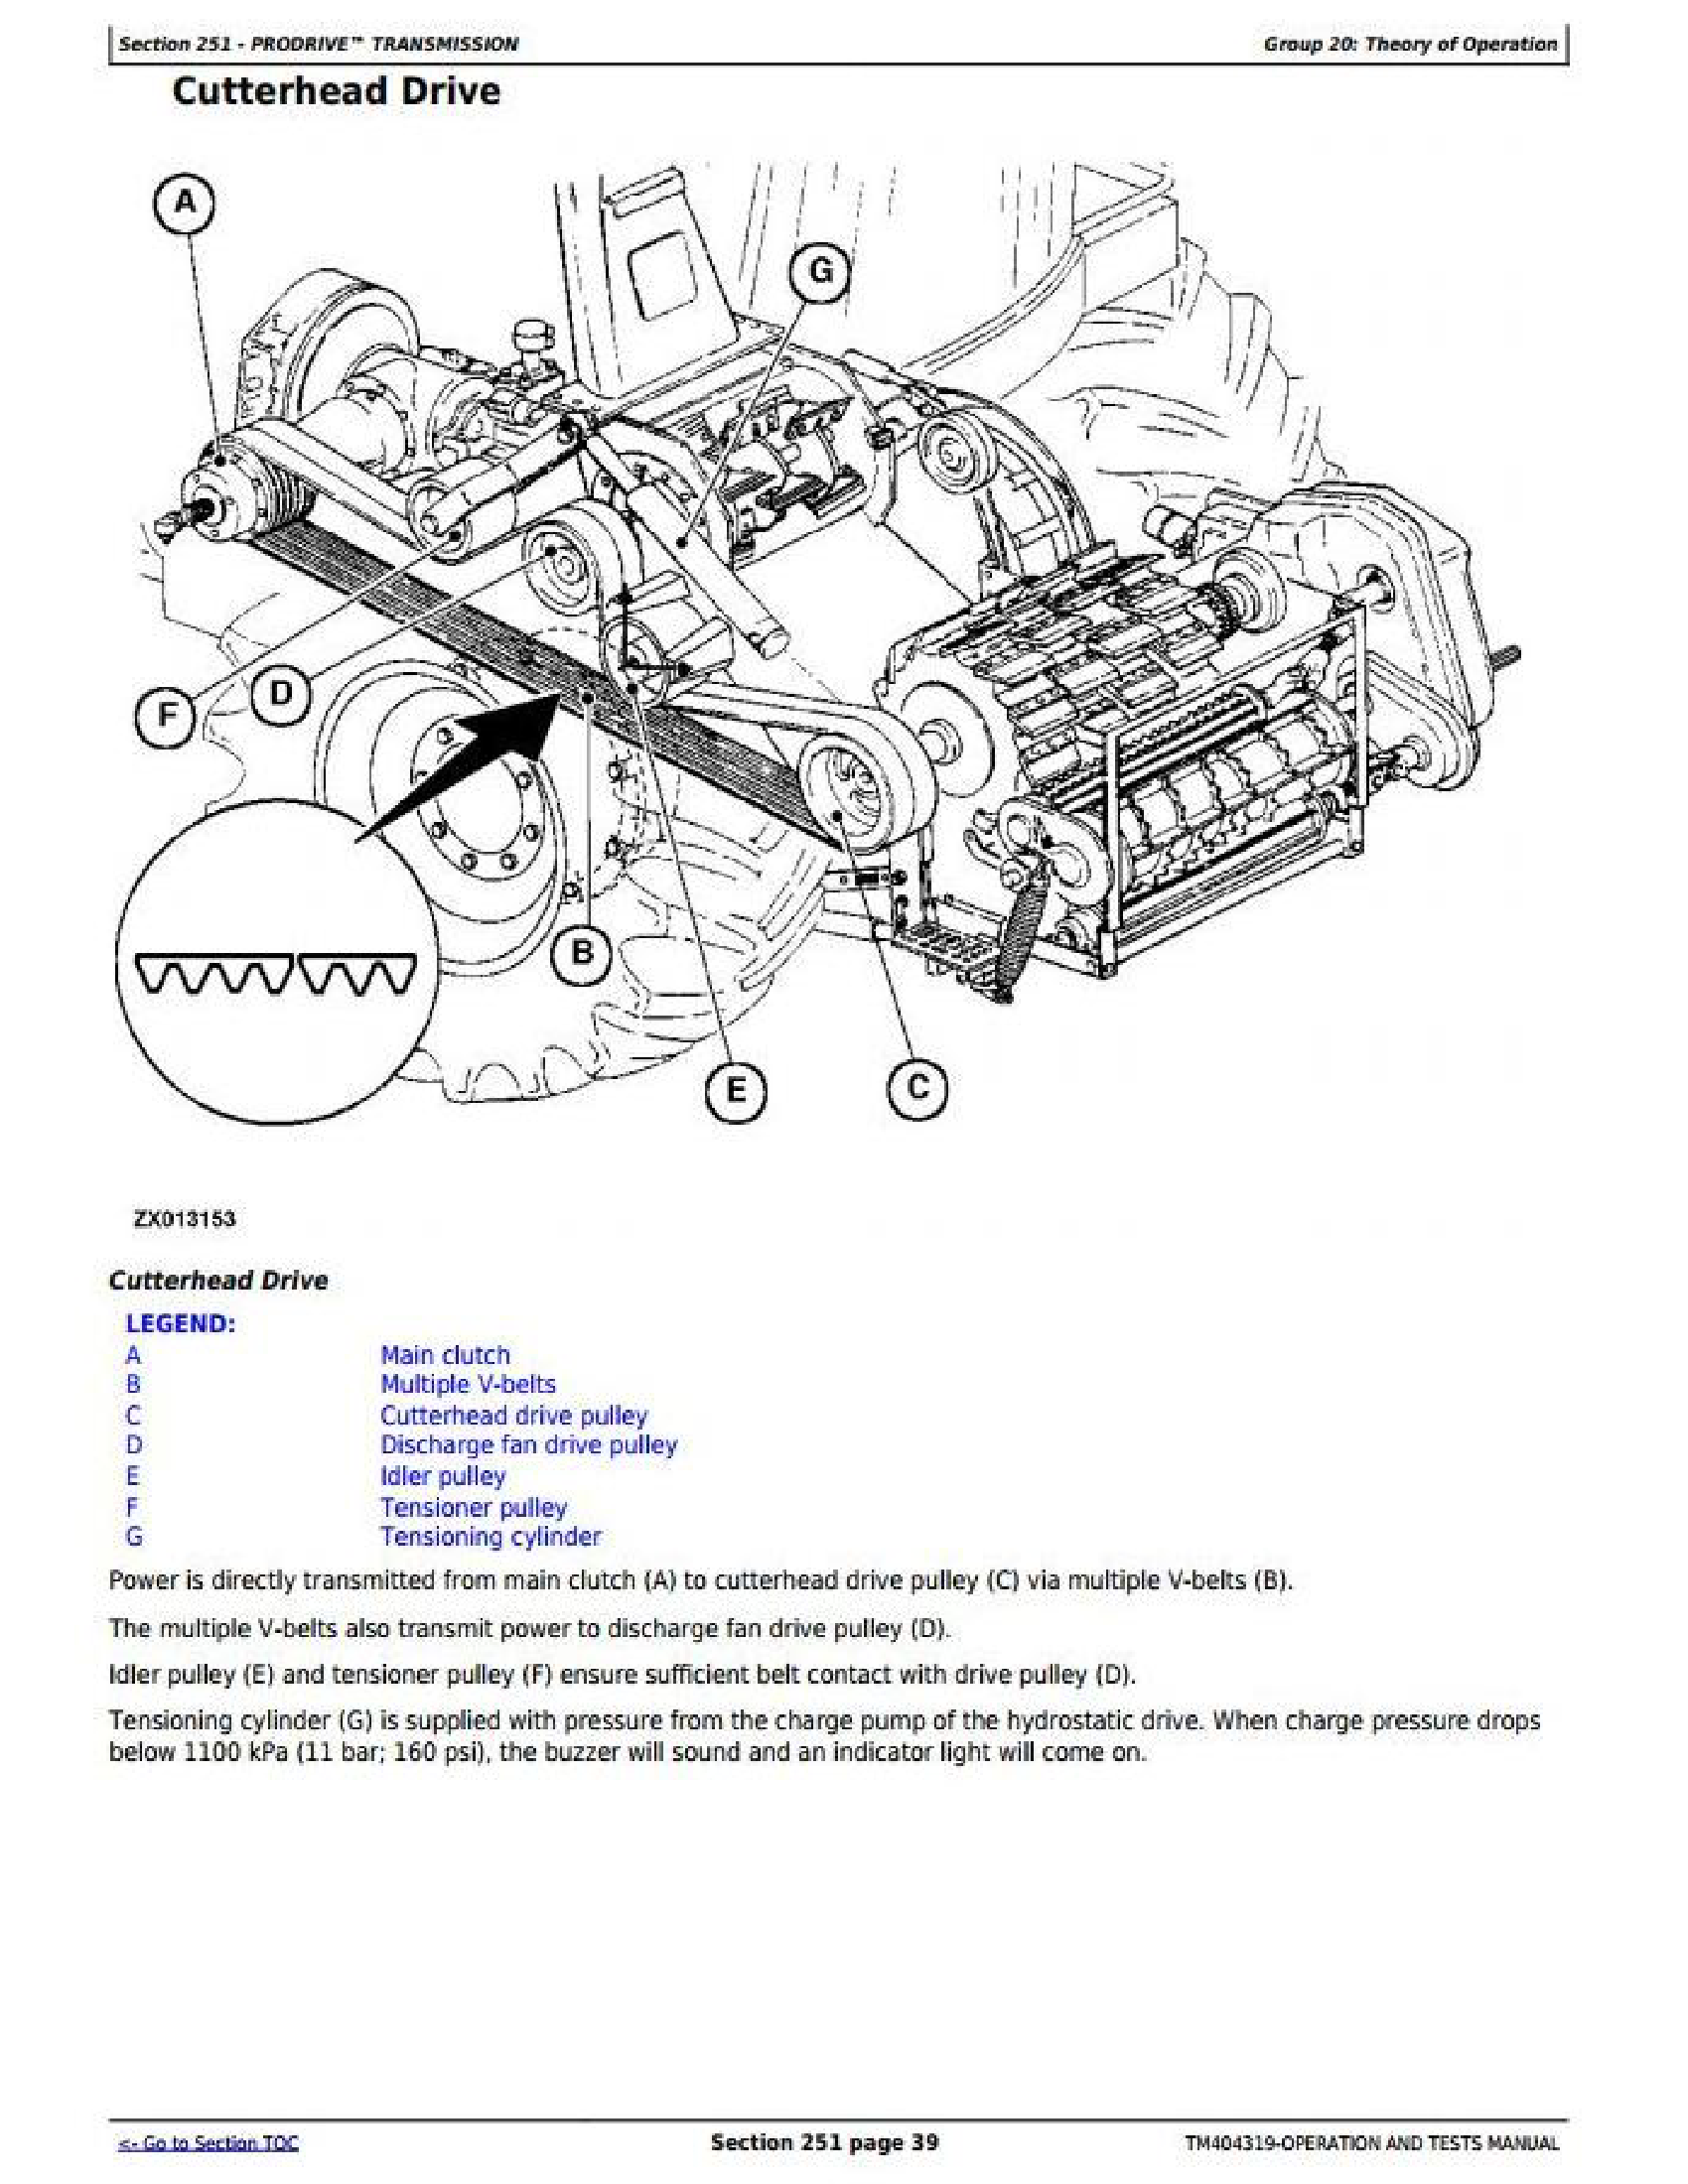 John Deere 748G-III manual pdf